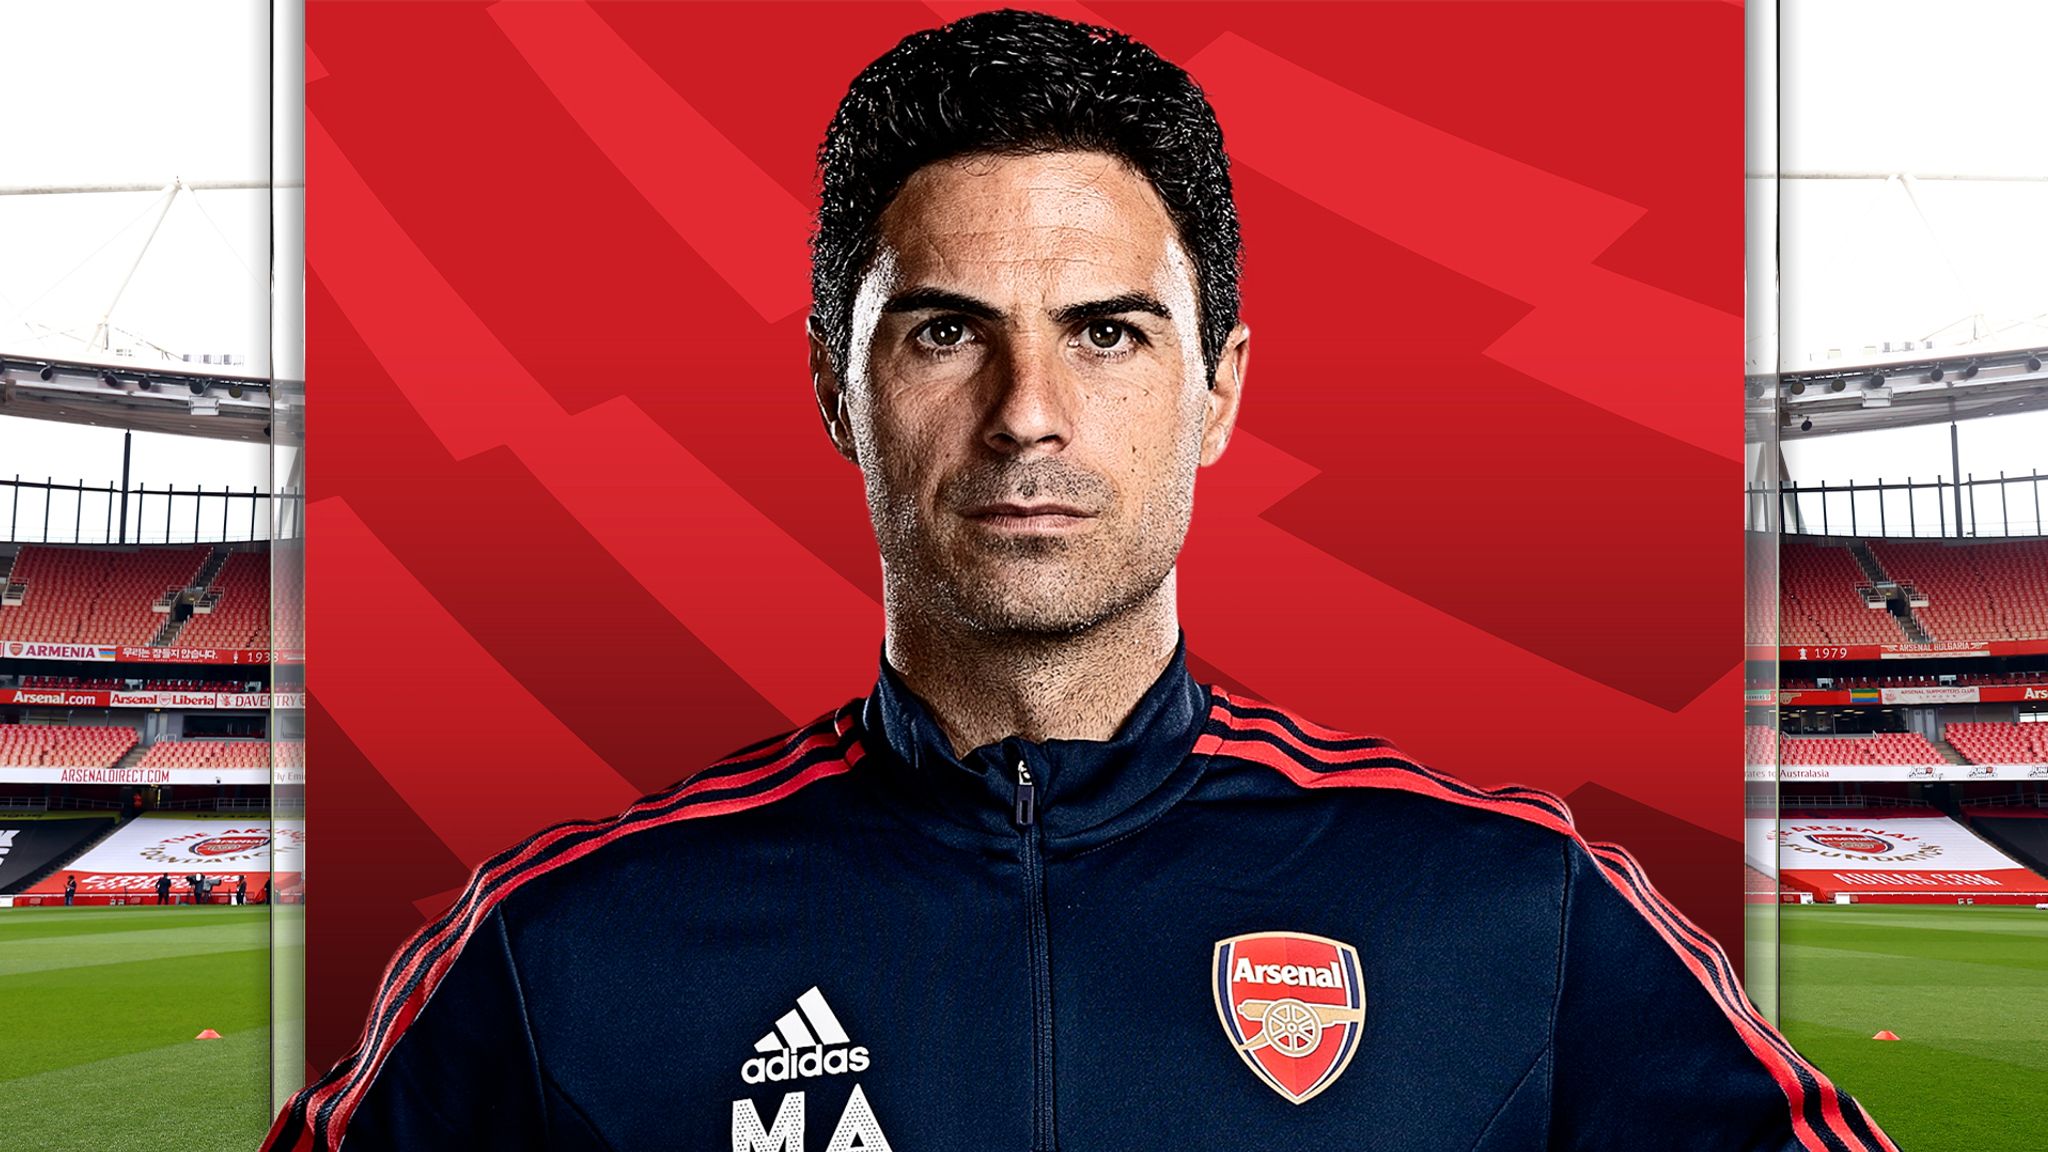 Arsenal x adidas: Looking Back At The Latest Partnership So Far